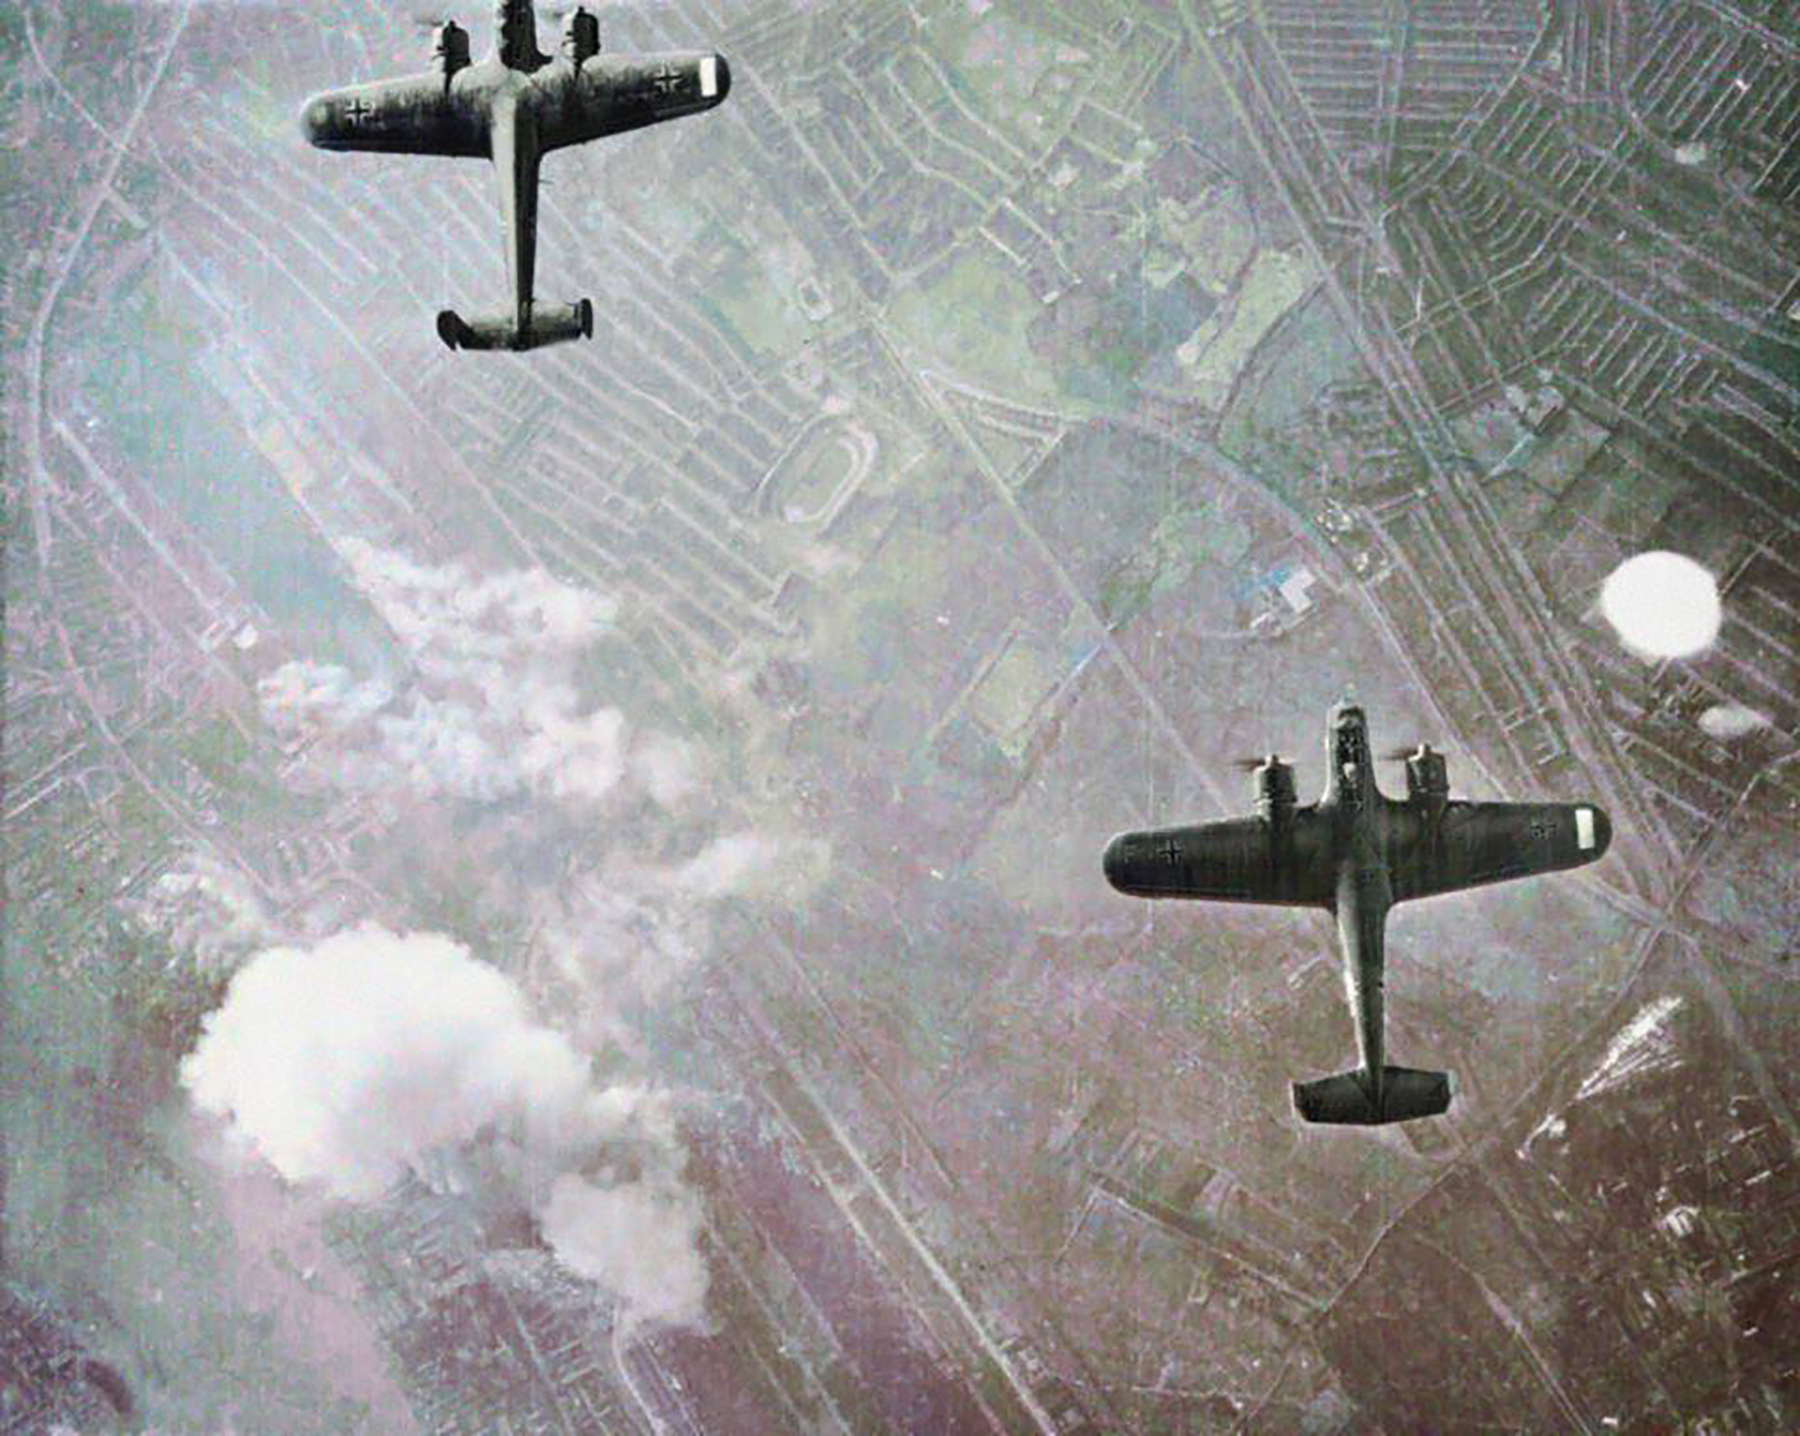 Dornier Do 17Z1 1.KG76 F1+FH Robert Zehbe WNr 2361 over West Ham London 7th Sep 1940 IWM C5423c